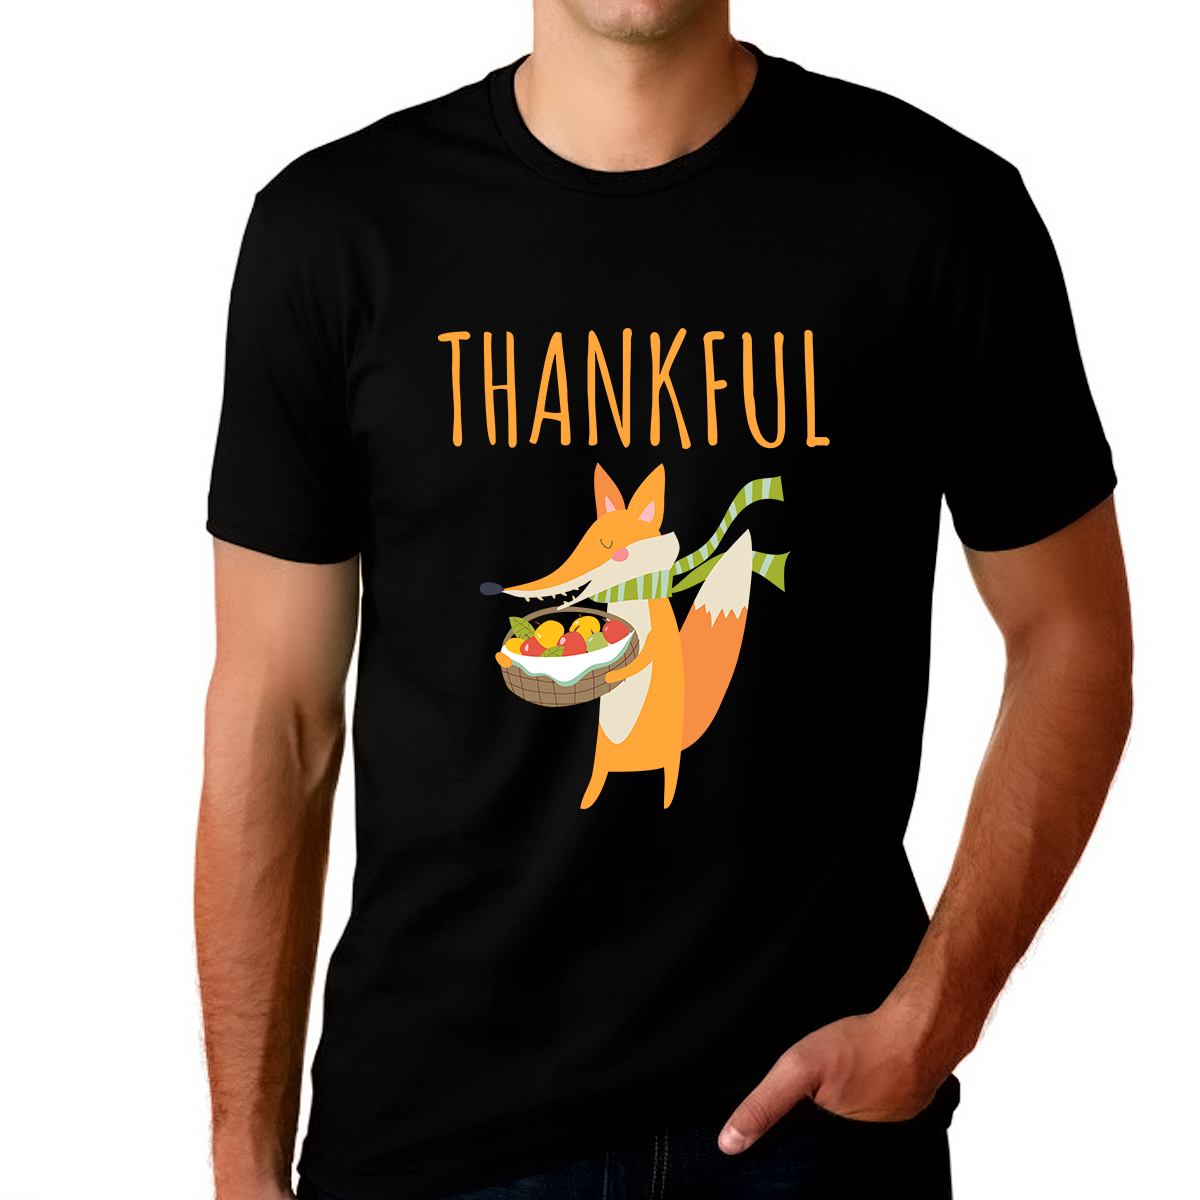 Funny Thanksgiving Shirts for Men Thanksgiving Gifts Fall Tshirts for Men Cool Fox Shirt Thankful Shirts